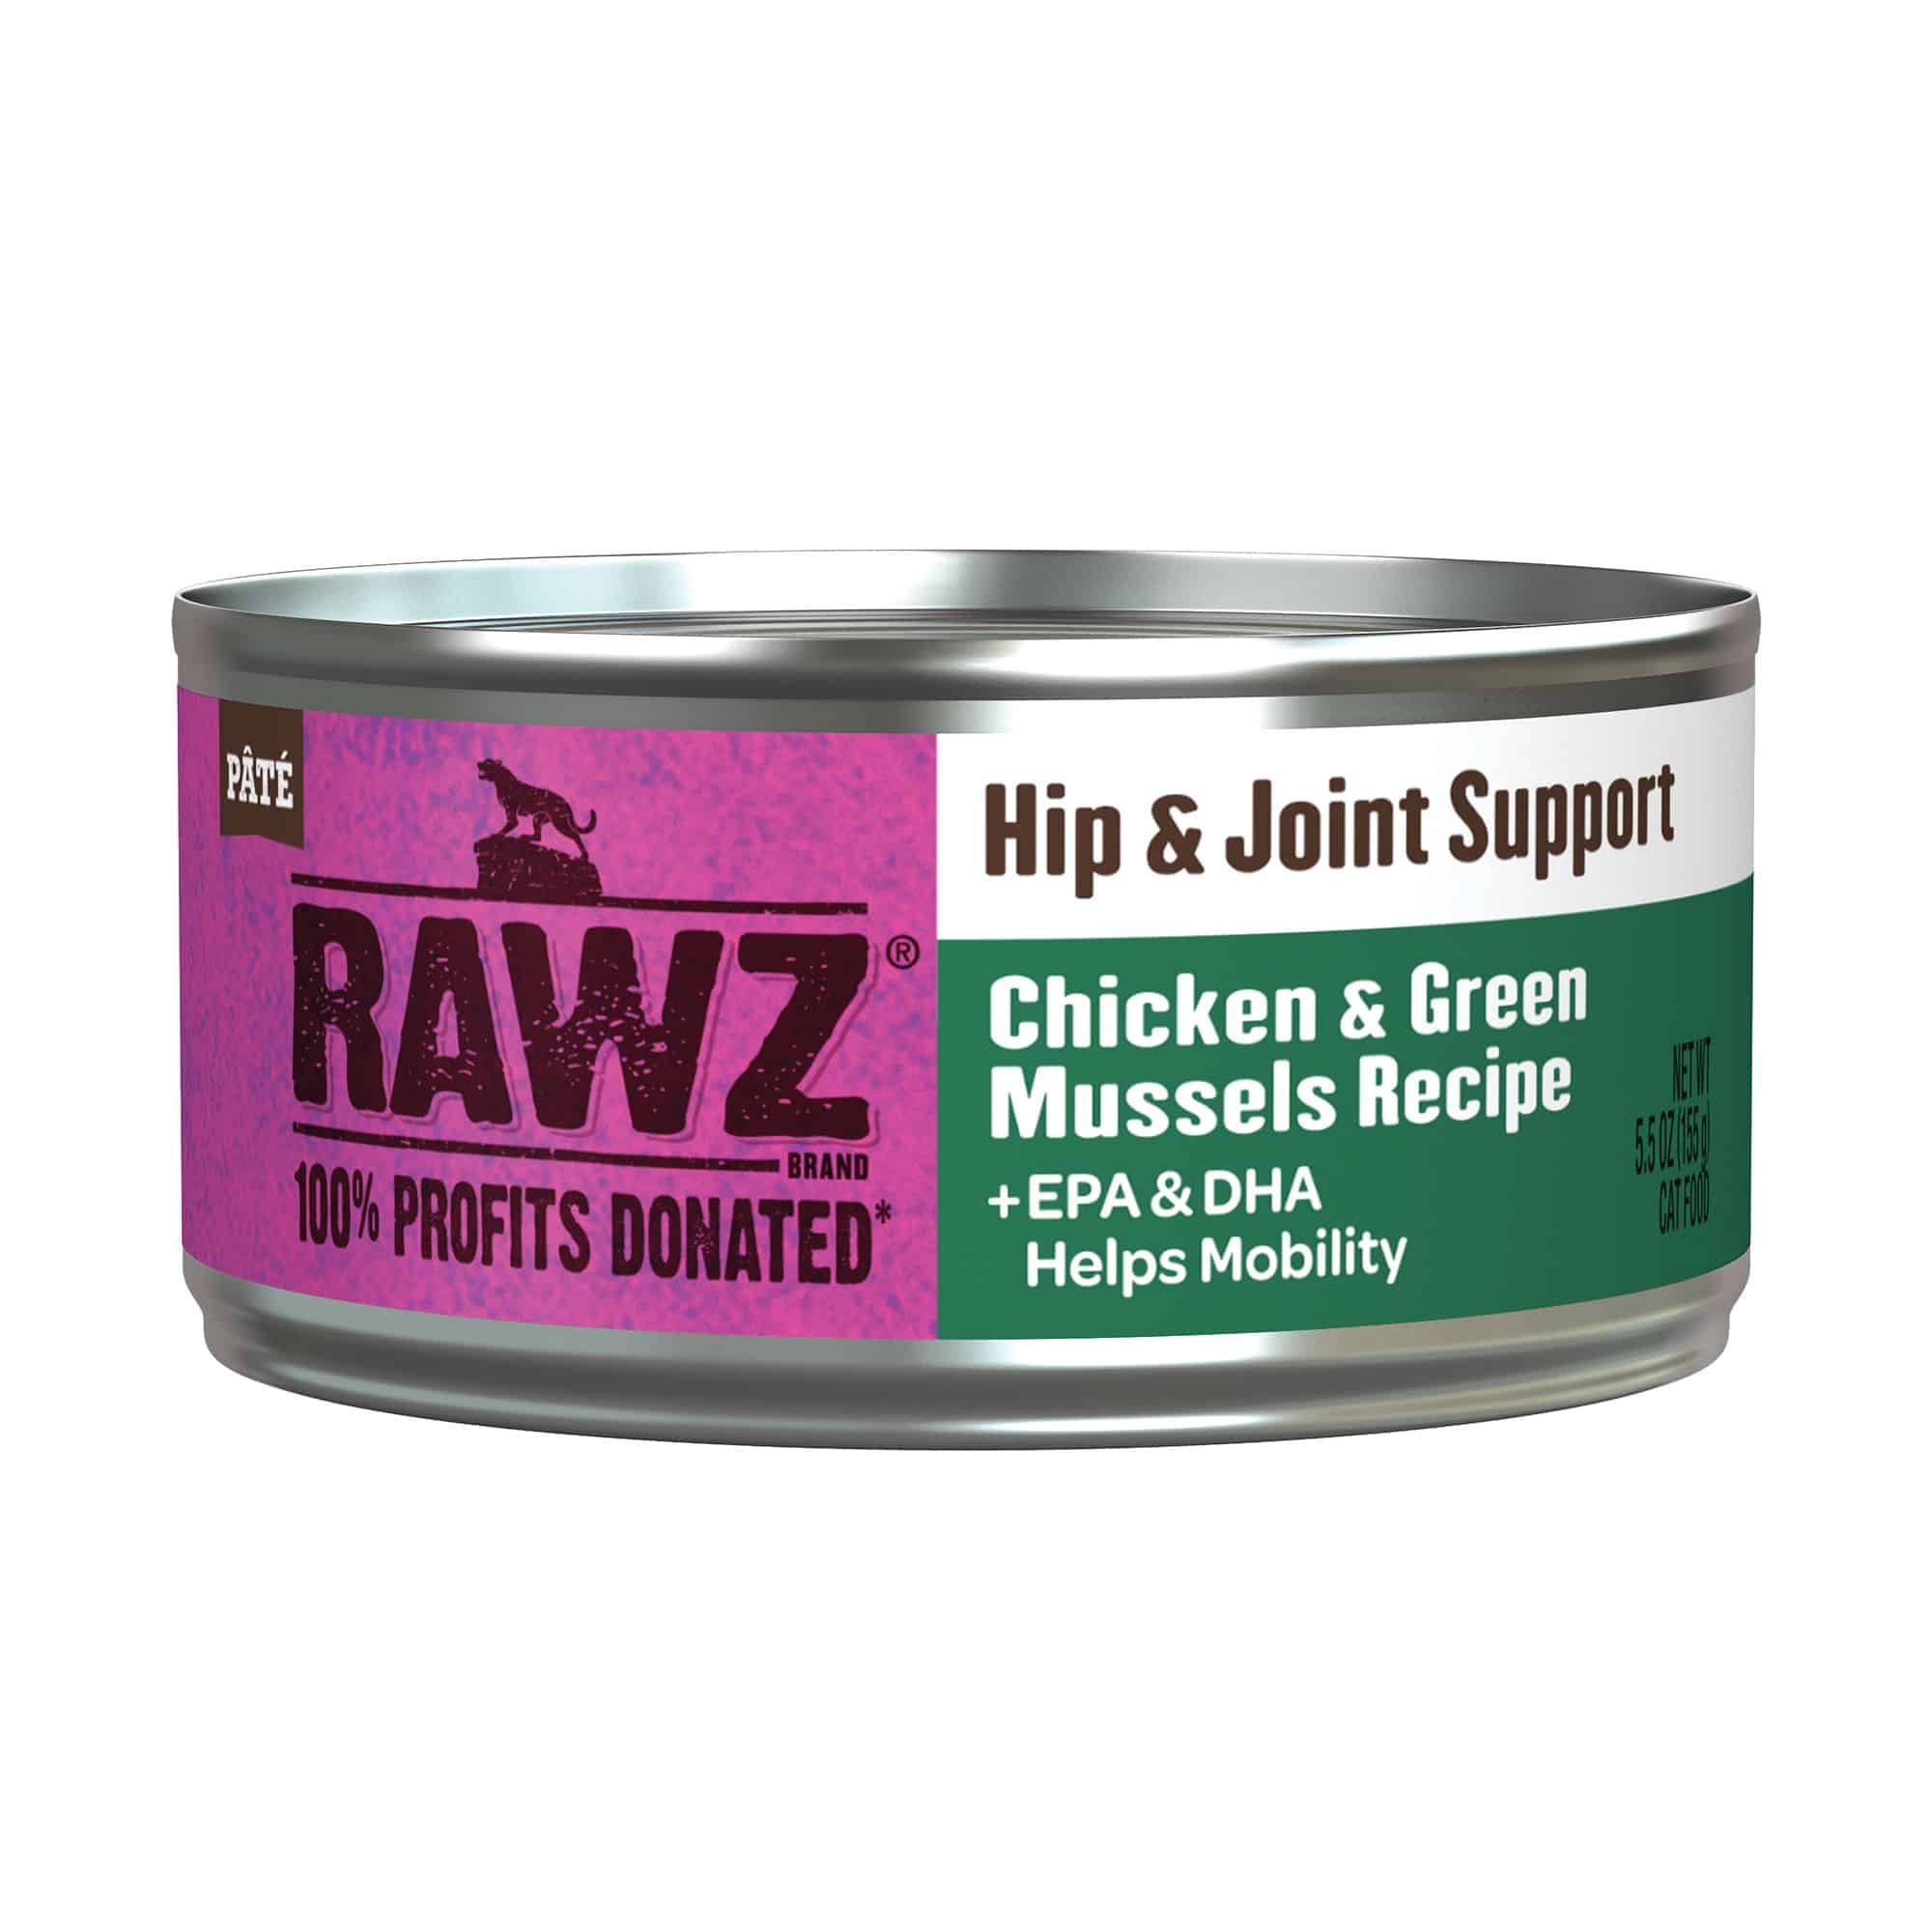 RAWZ - Hip & Joint Support Chicken & Green Mussels (Wet Cat Food)